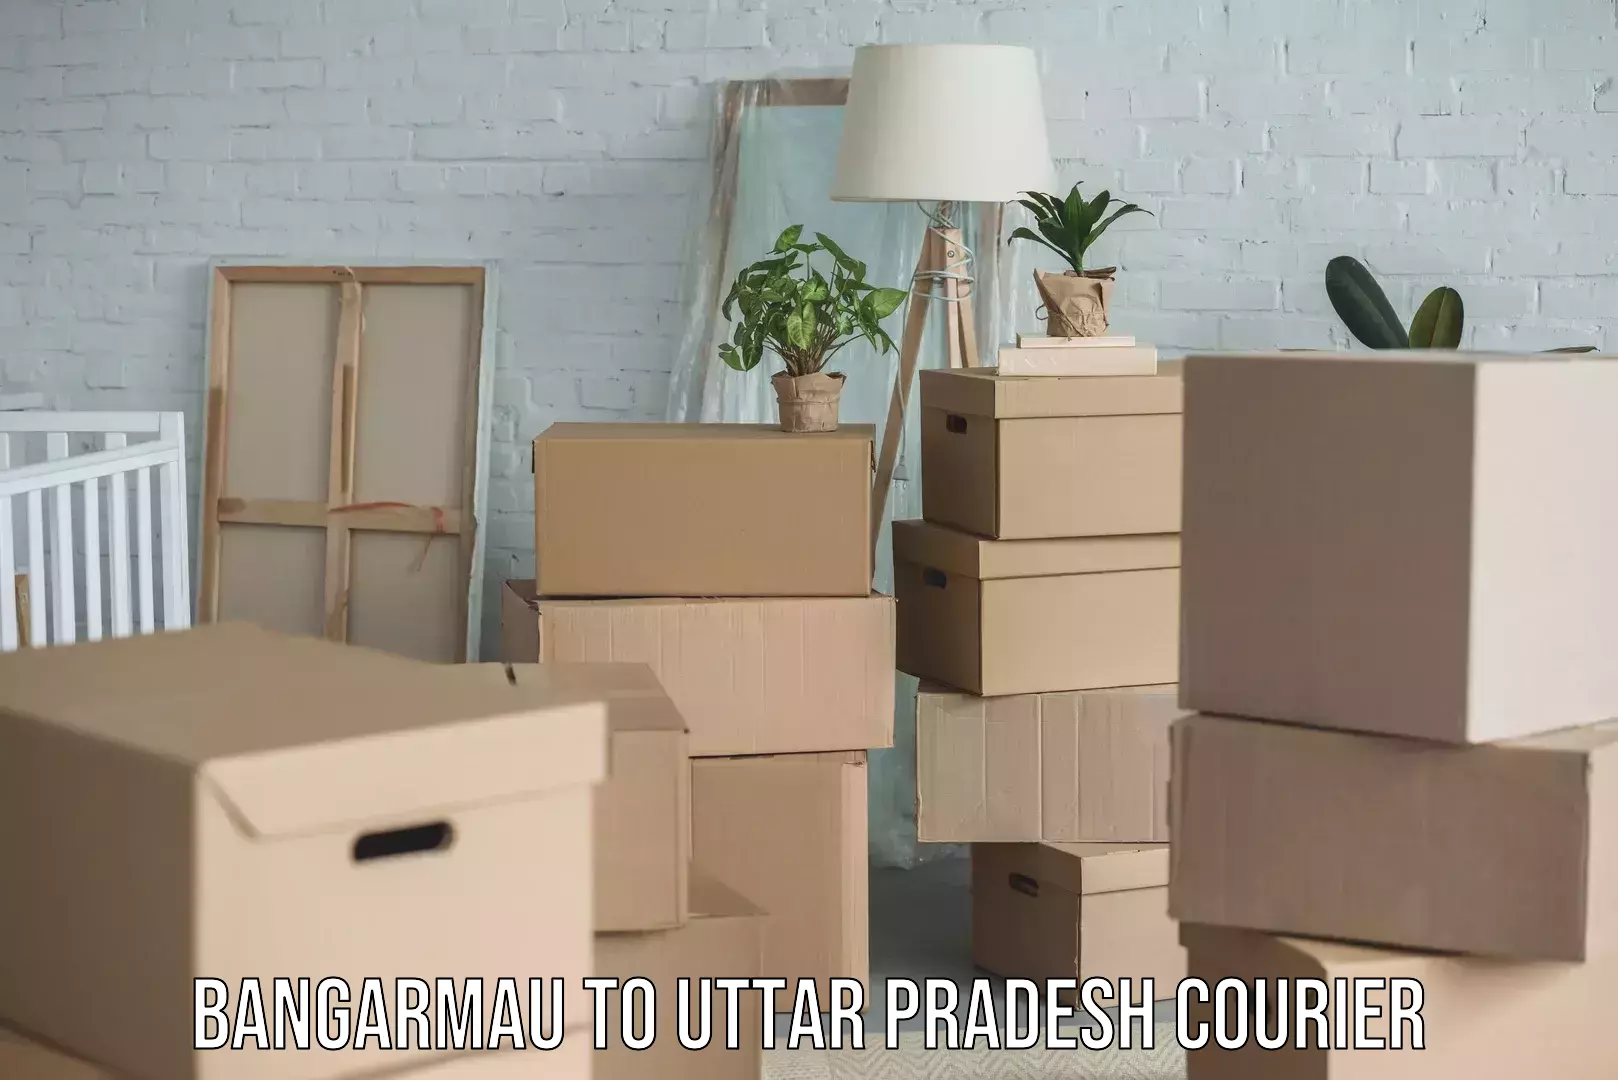 Courier service comparison Bangarmau to Uttar Pradesh